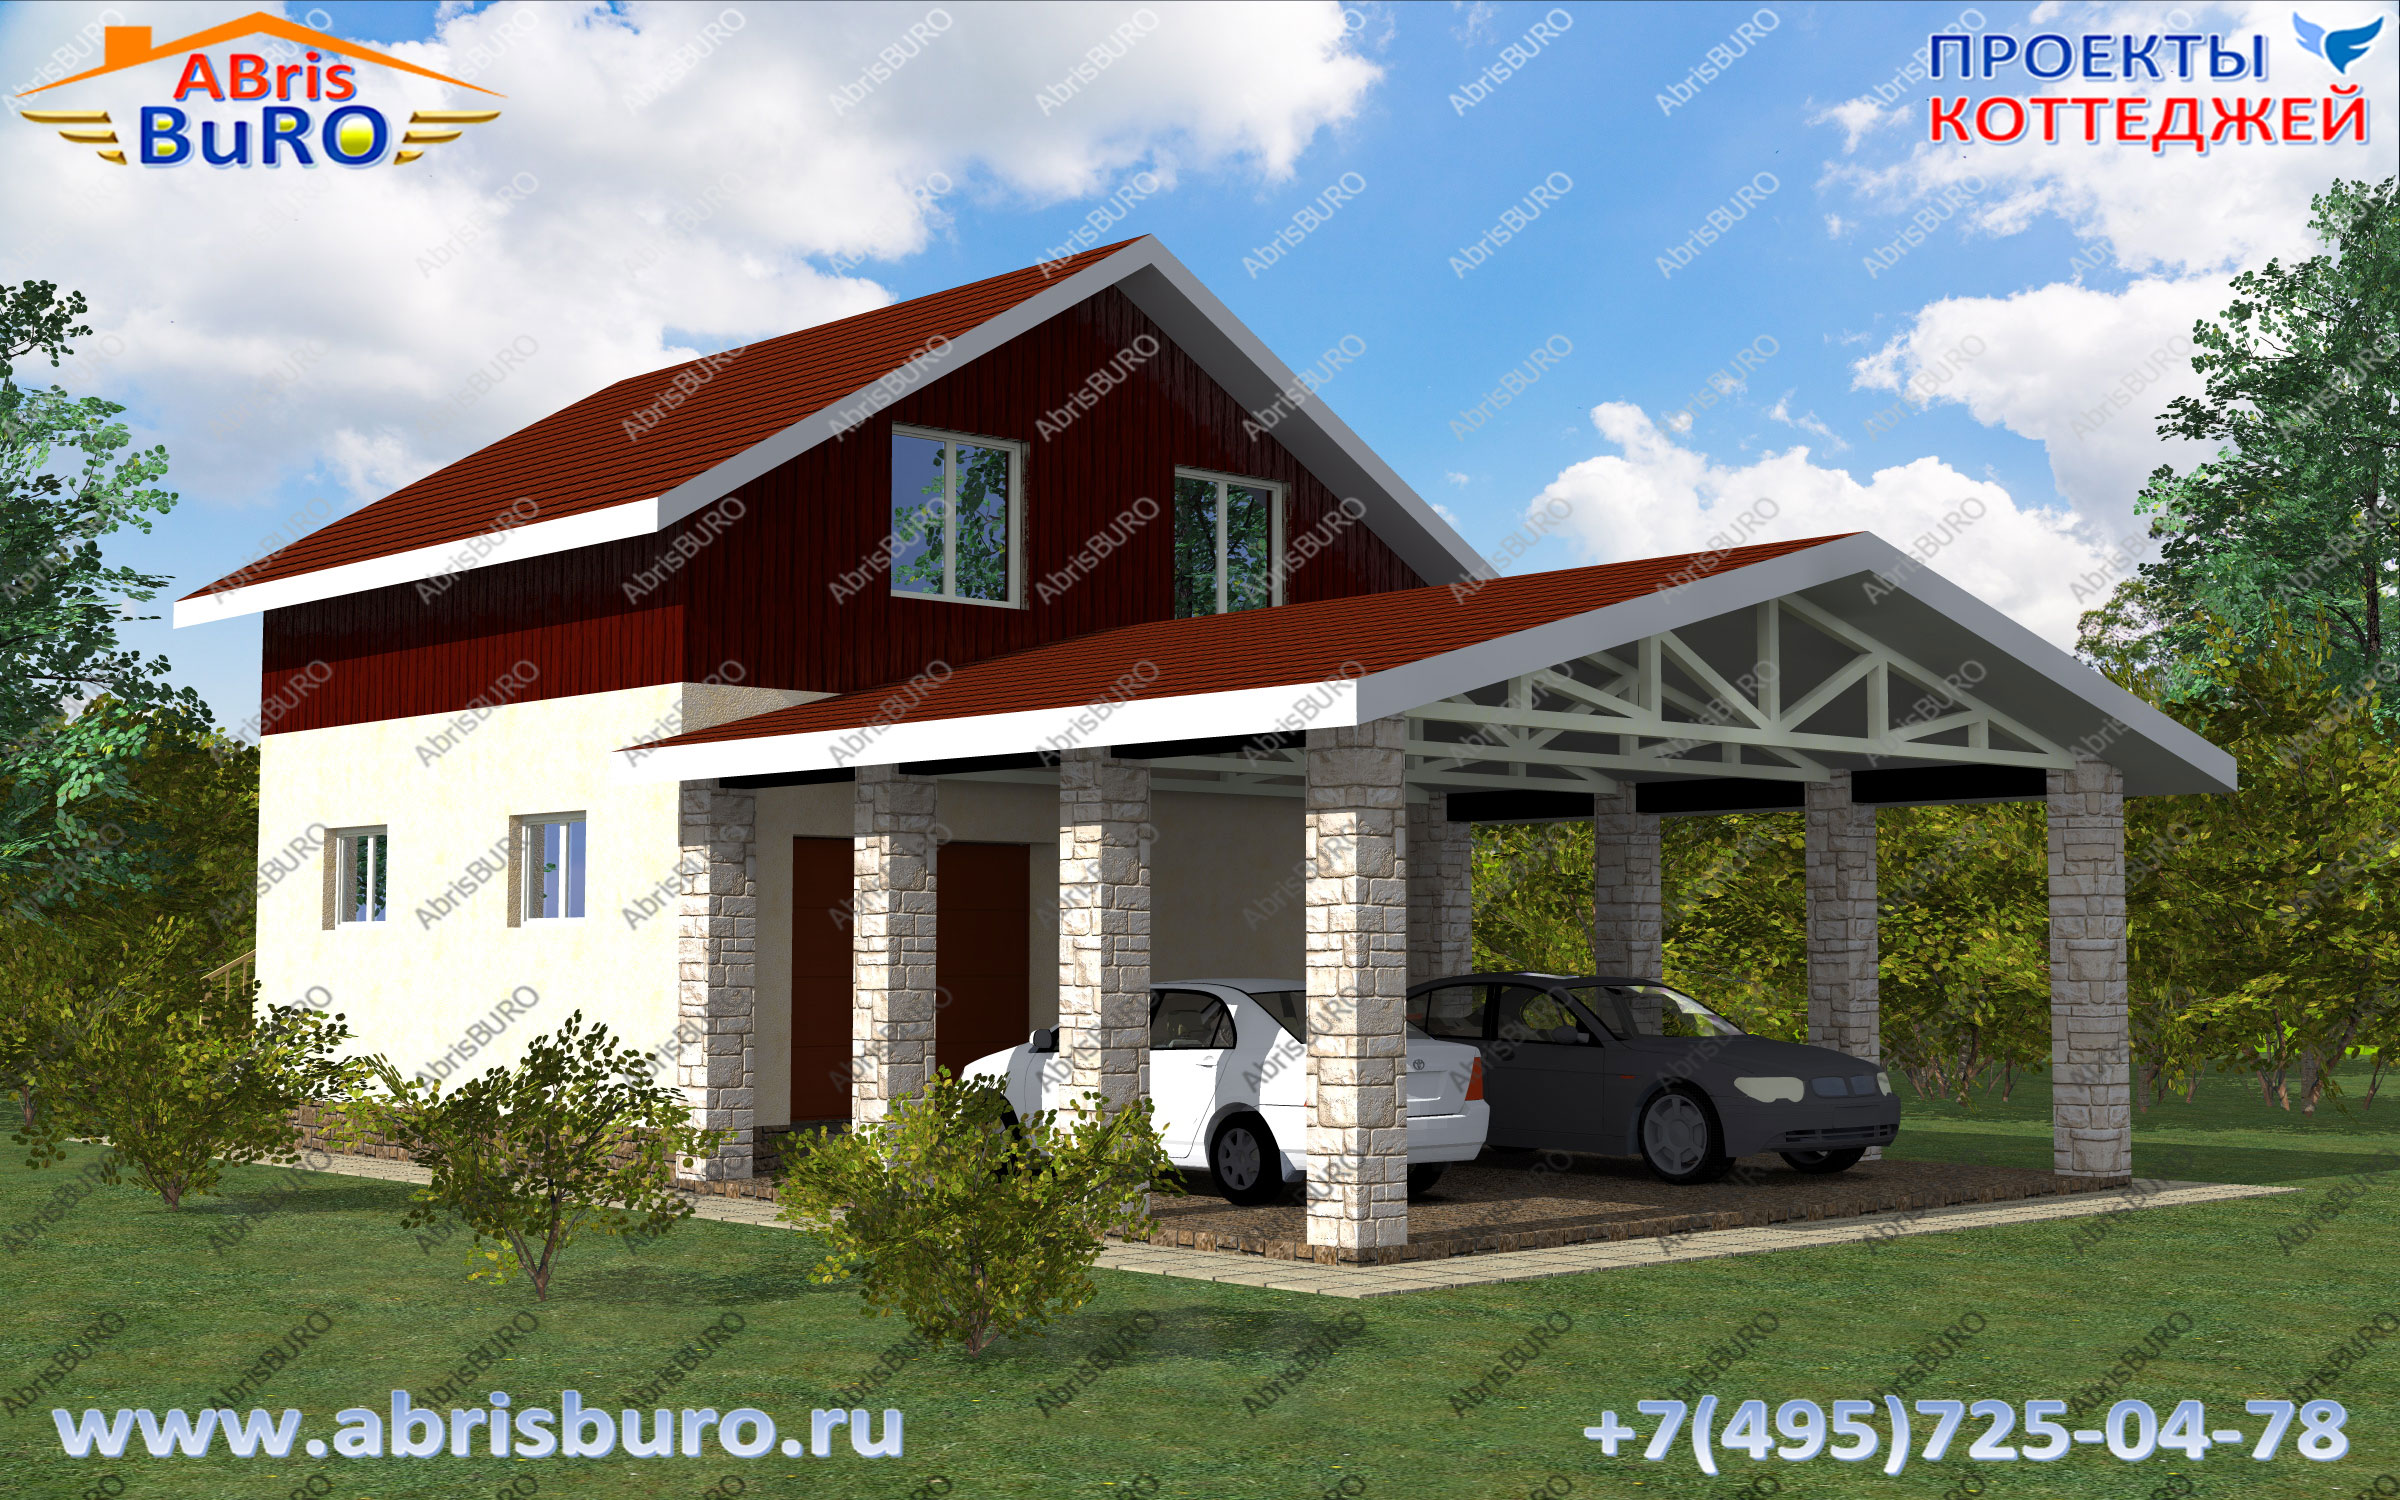 K0192-94 Проект гостевого дома с гаражом www.abrisburo.ru